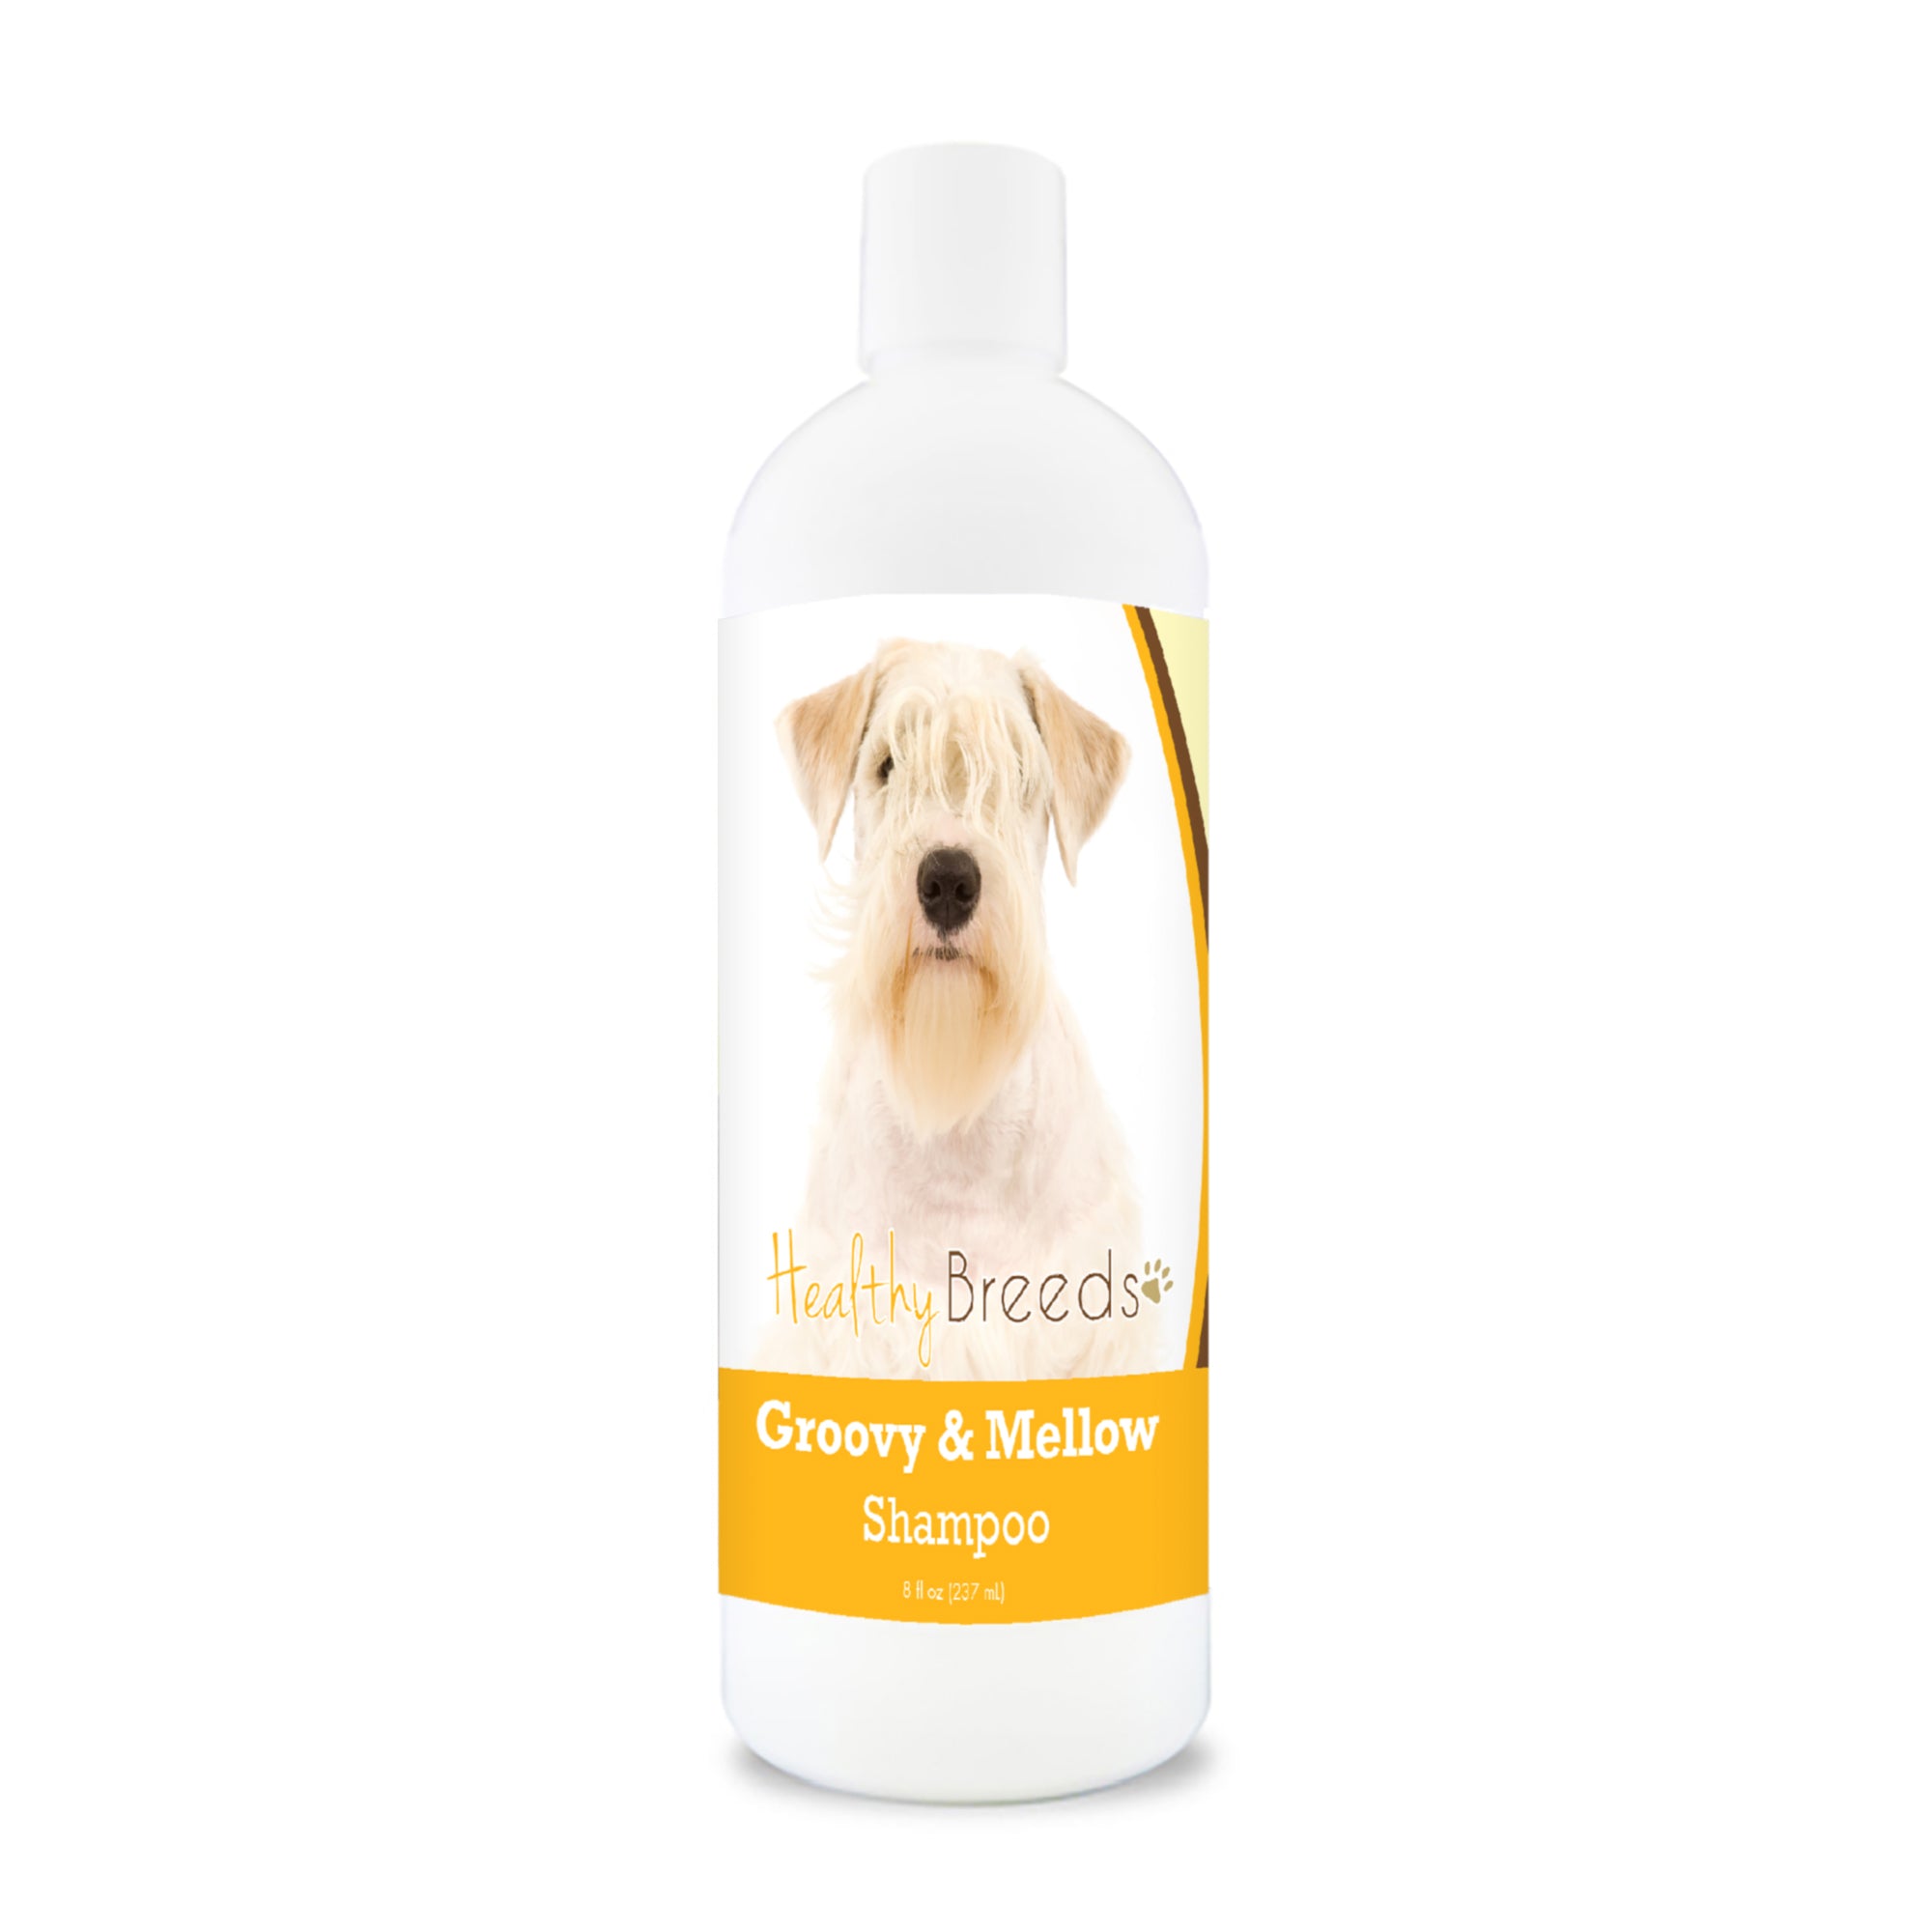 Sealyham Terrier Groovy & Mellow Shampoo 8 oz